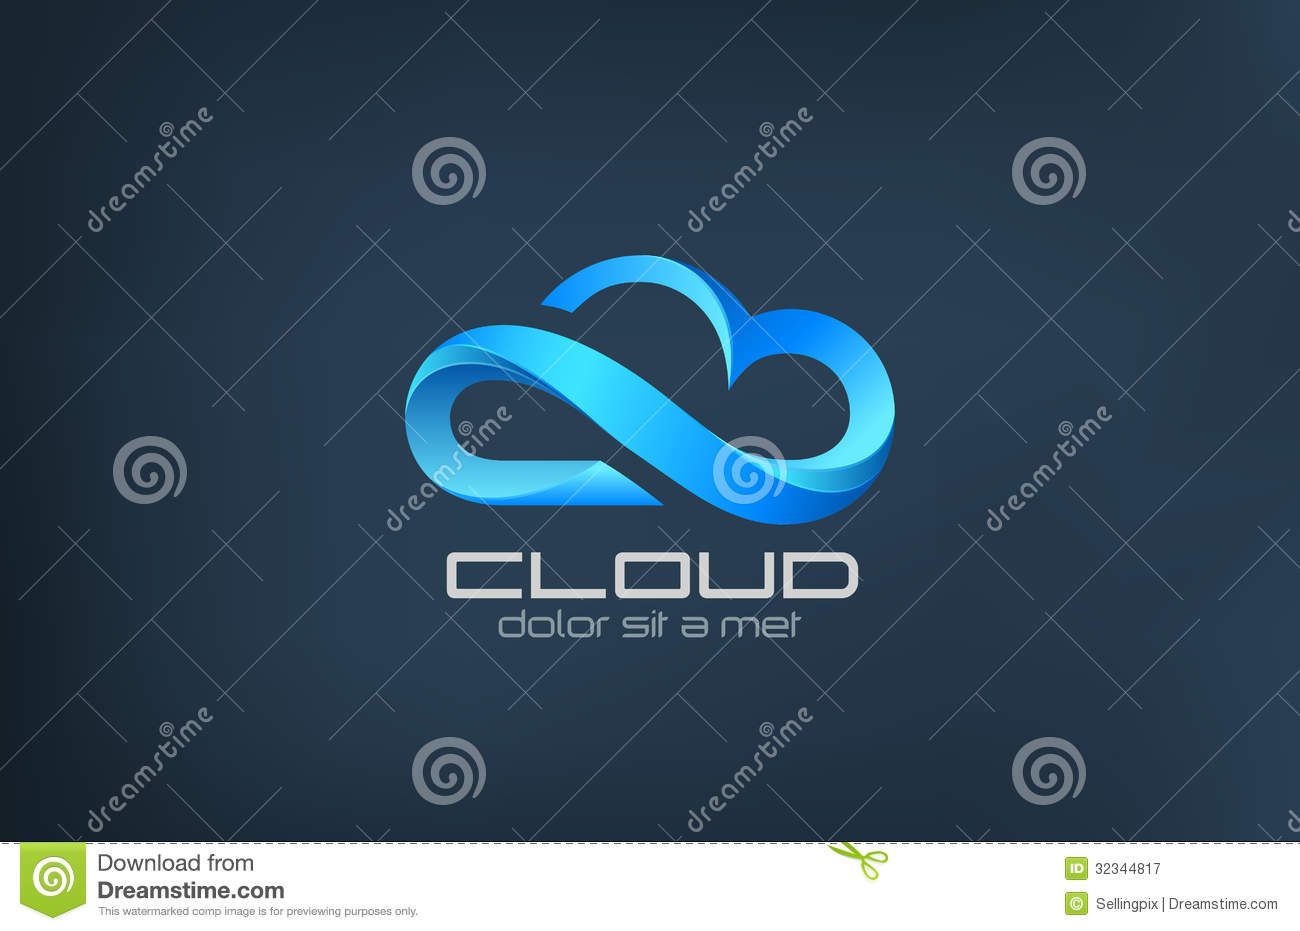 Creative Cloud Logo